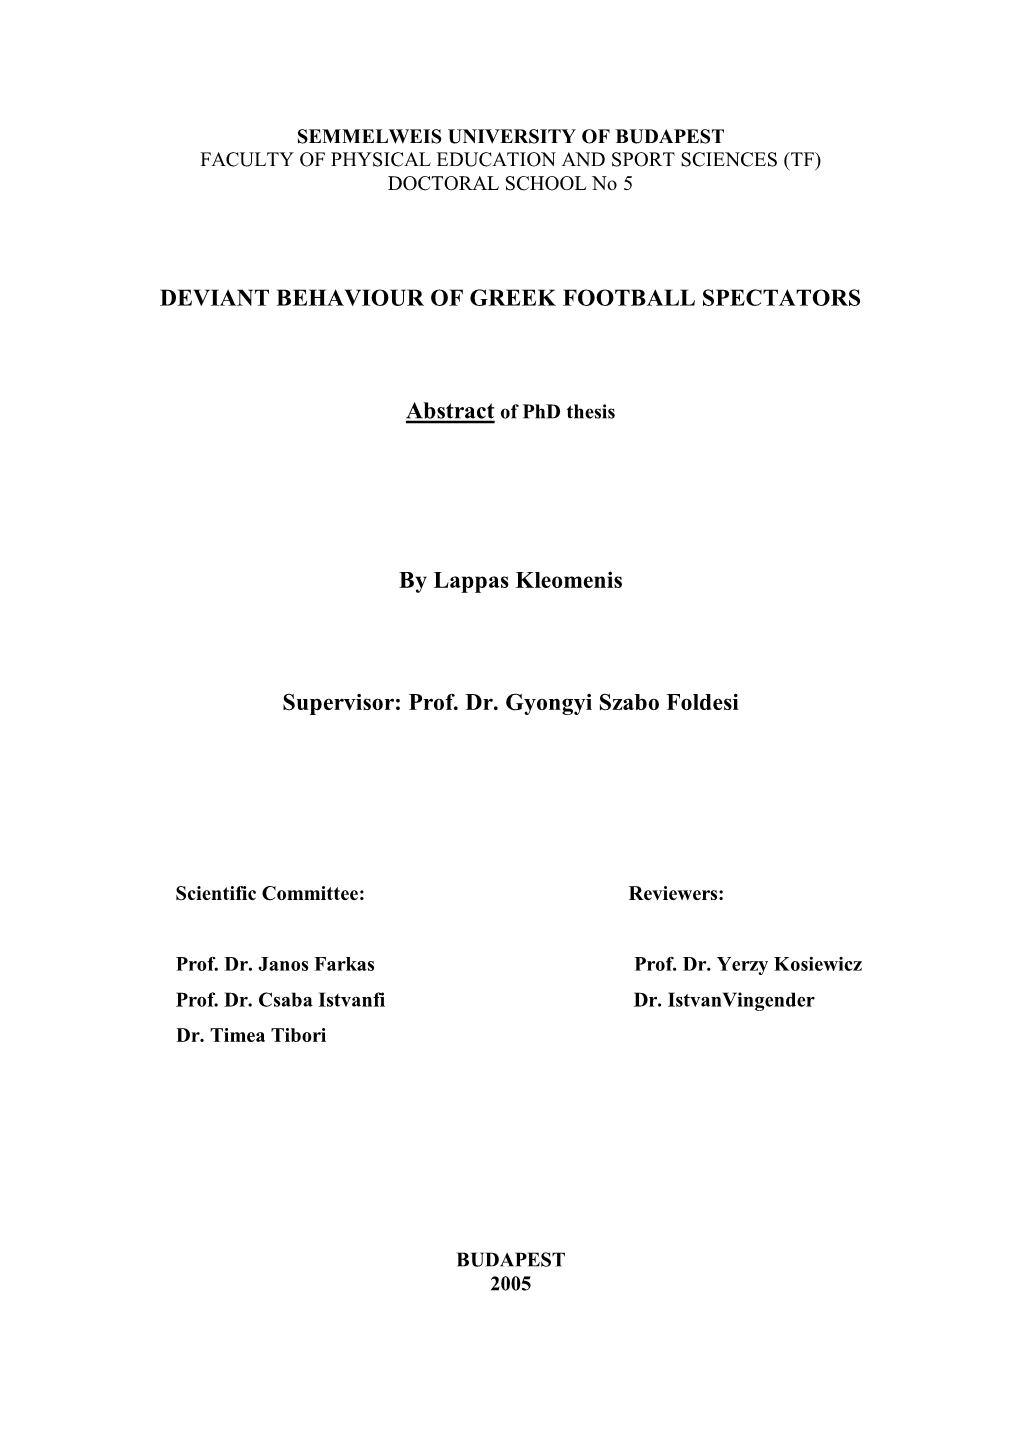 DEVIANT BEHAVIOUR of GREEK FOOTBALL SPECTATORS By